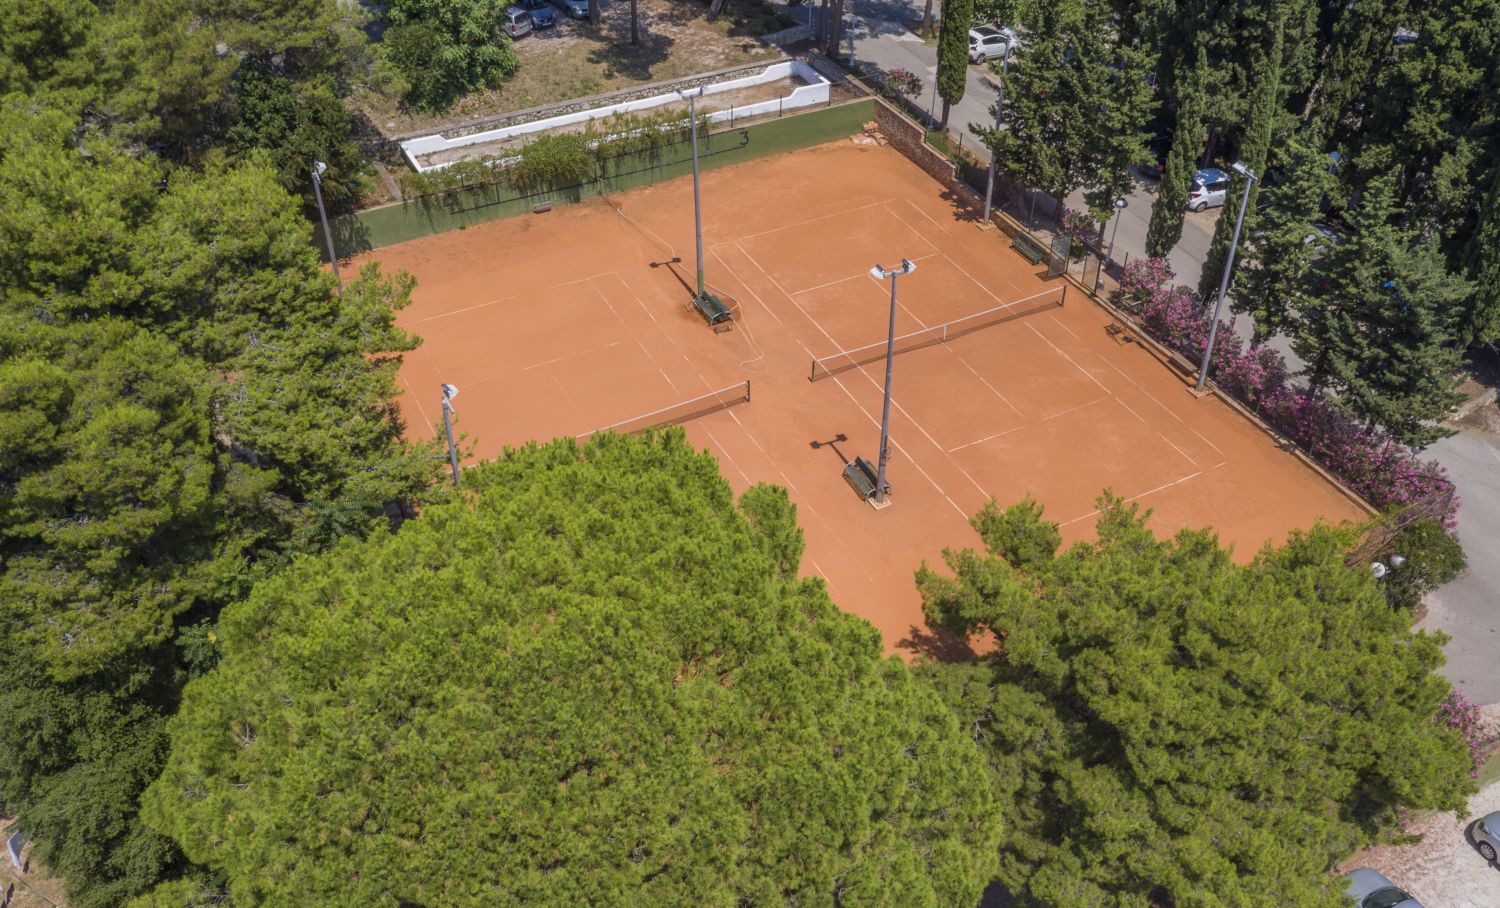 23 aminess bellevue village activities tennis courts 1